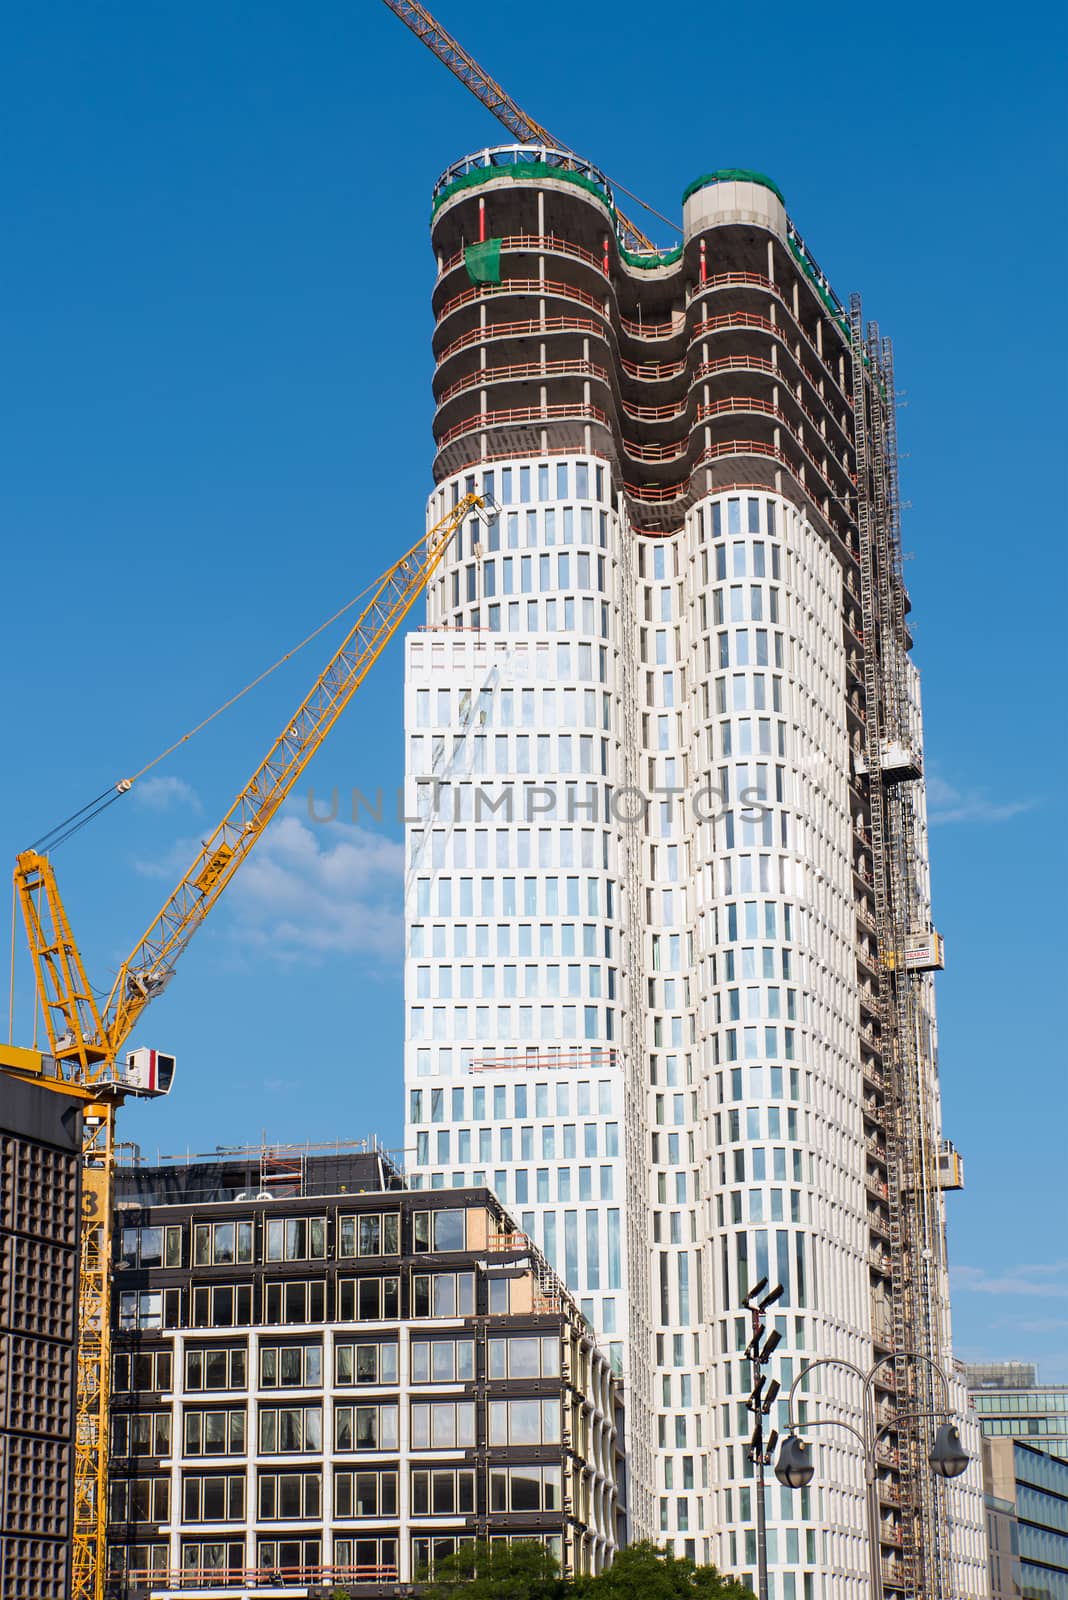 Construction site of a skyscraper seen in Berlin